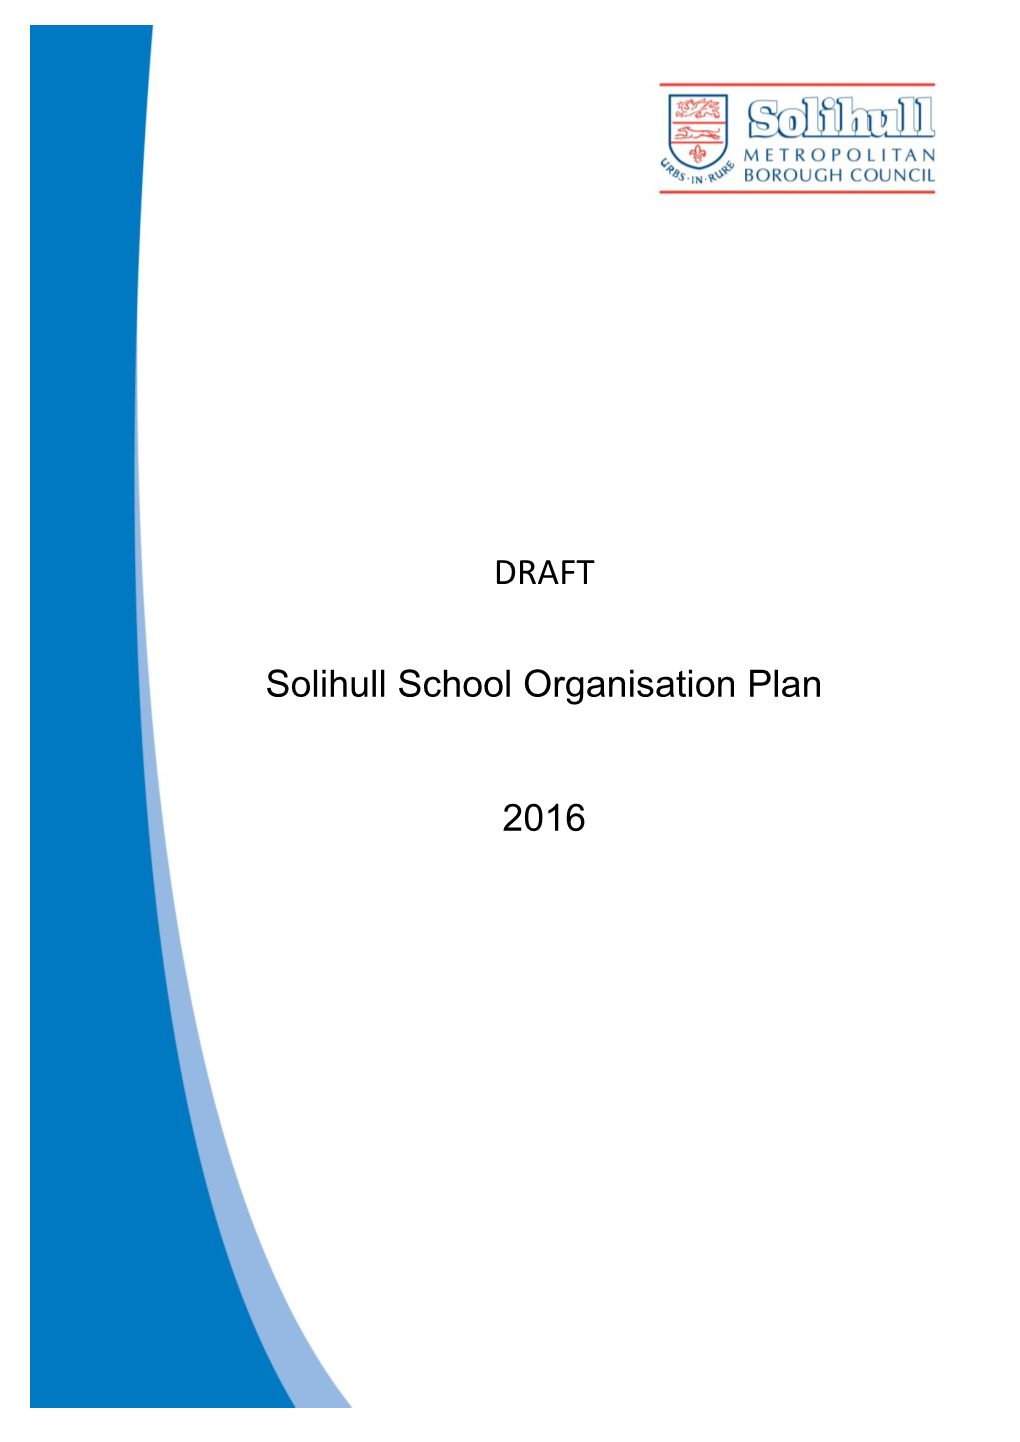 DRAFT Solihull School Organisation Plan 2016